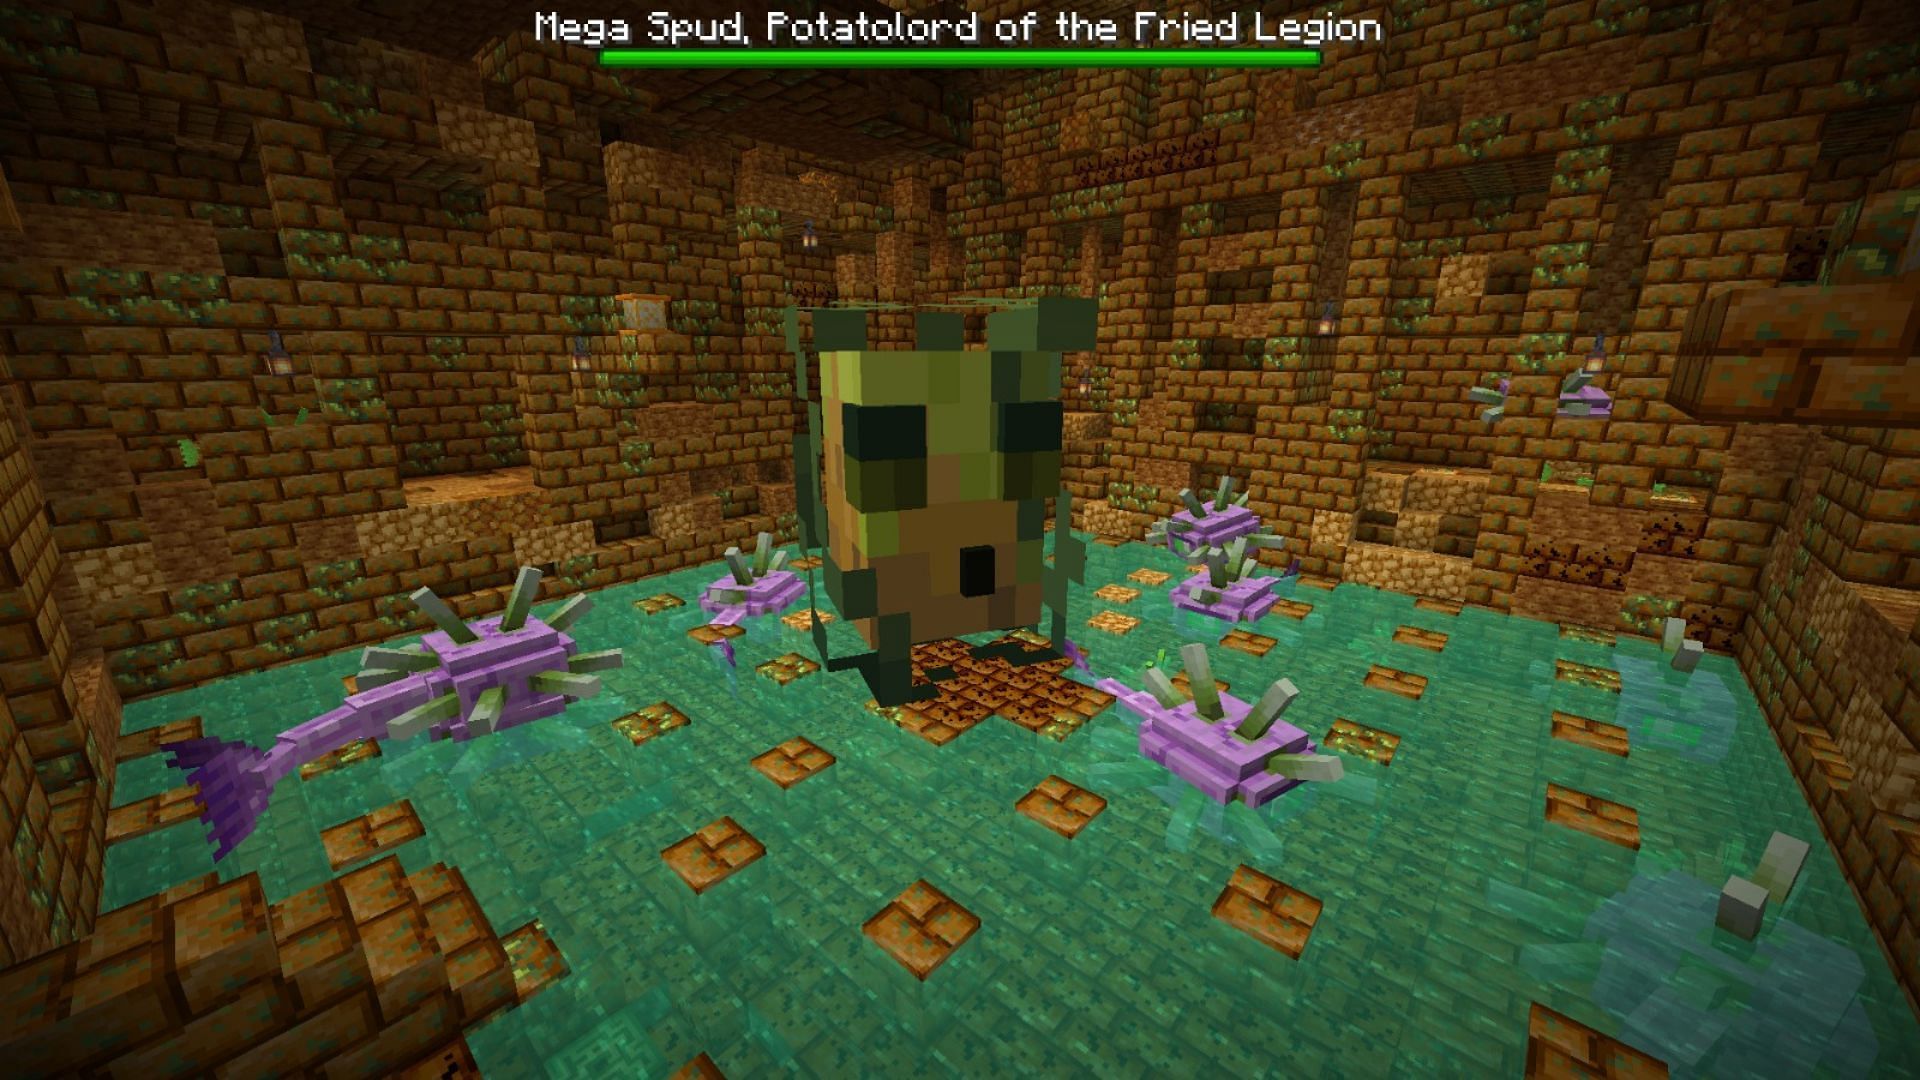 The Potato Boss in Minecraft (Image via Mojang Studios)